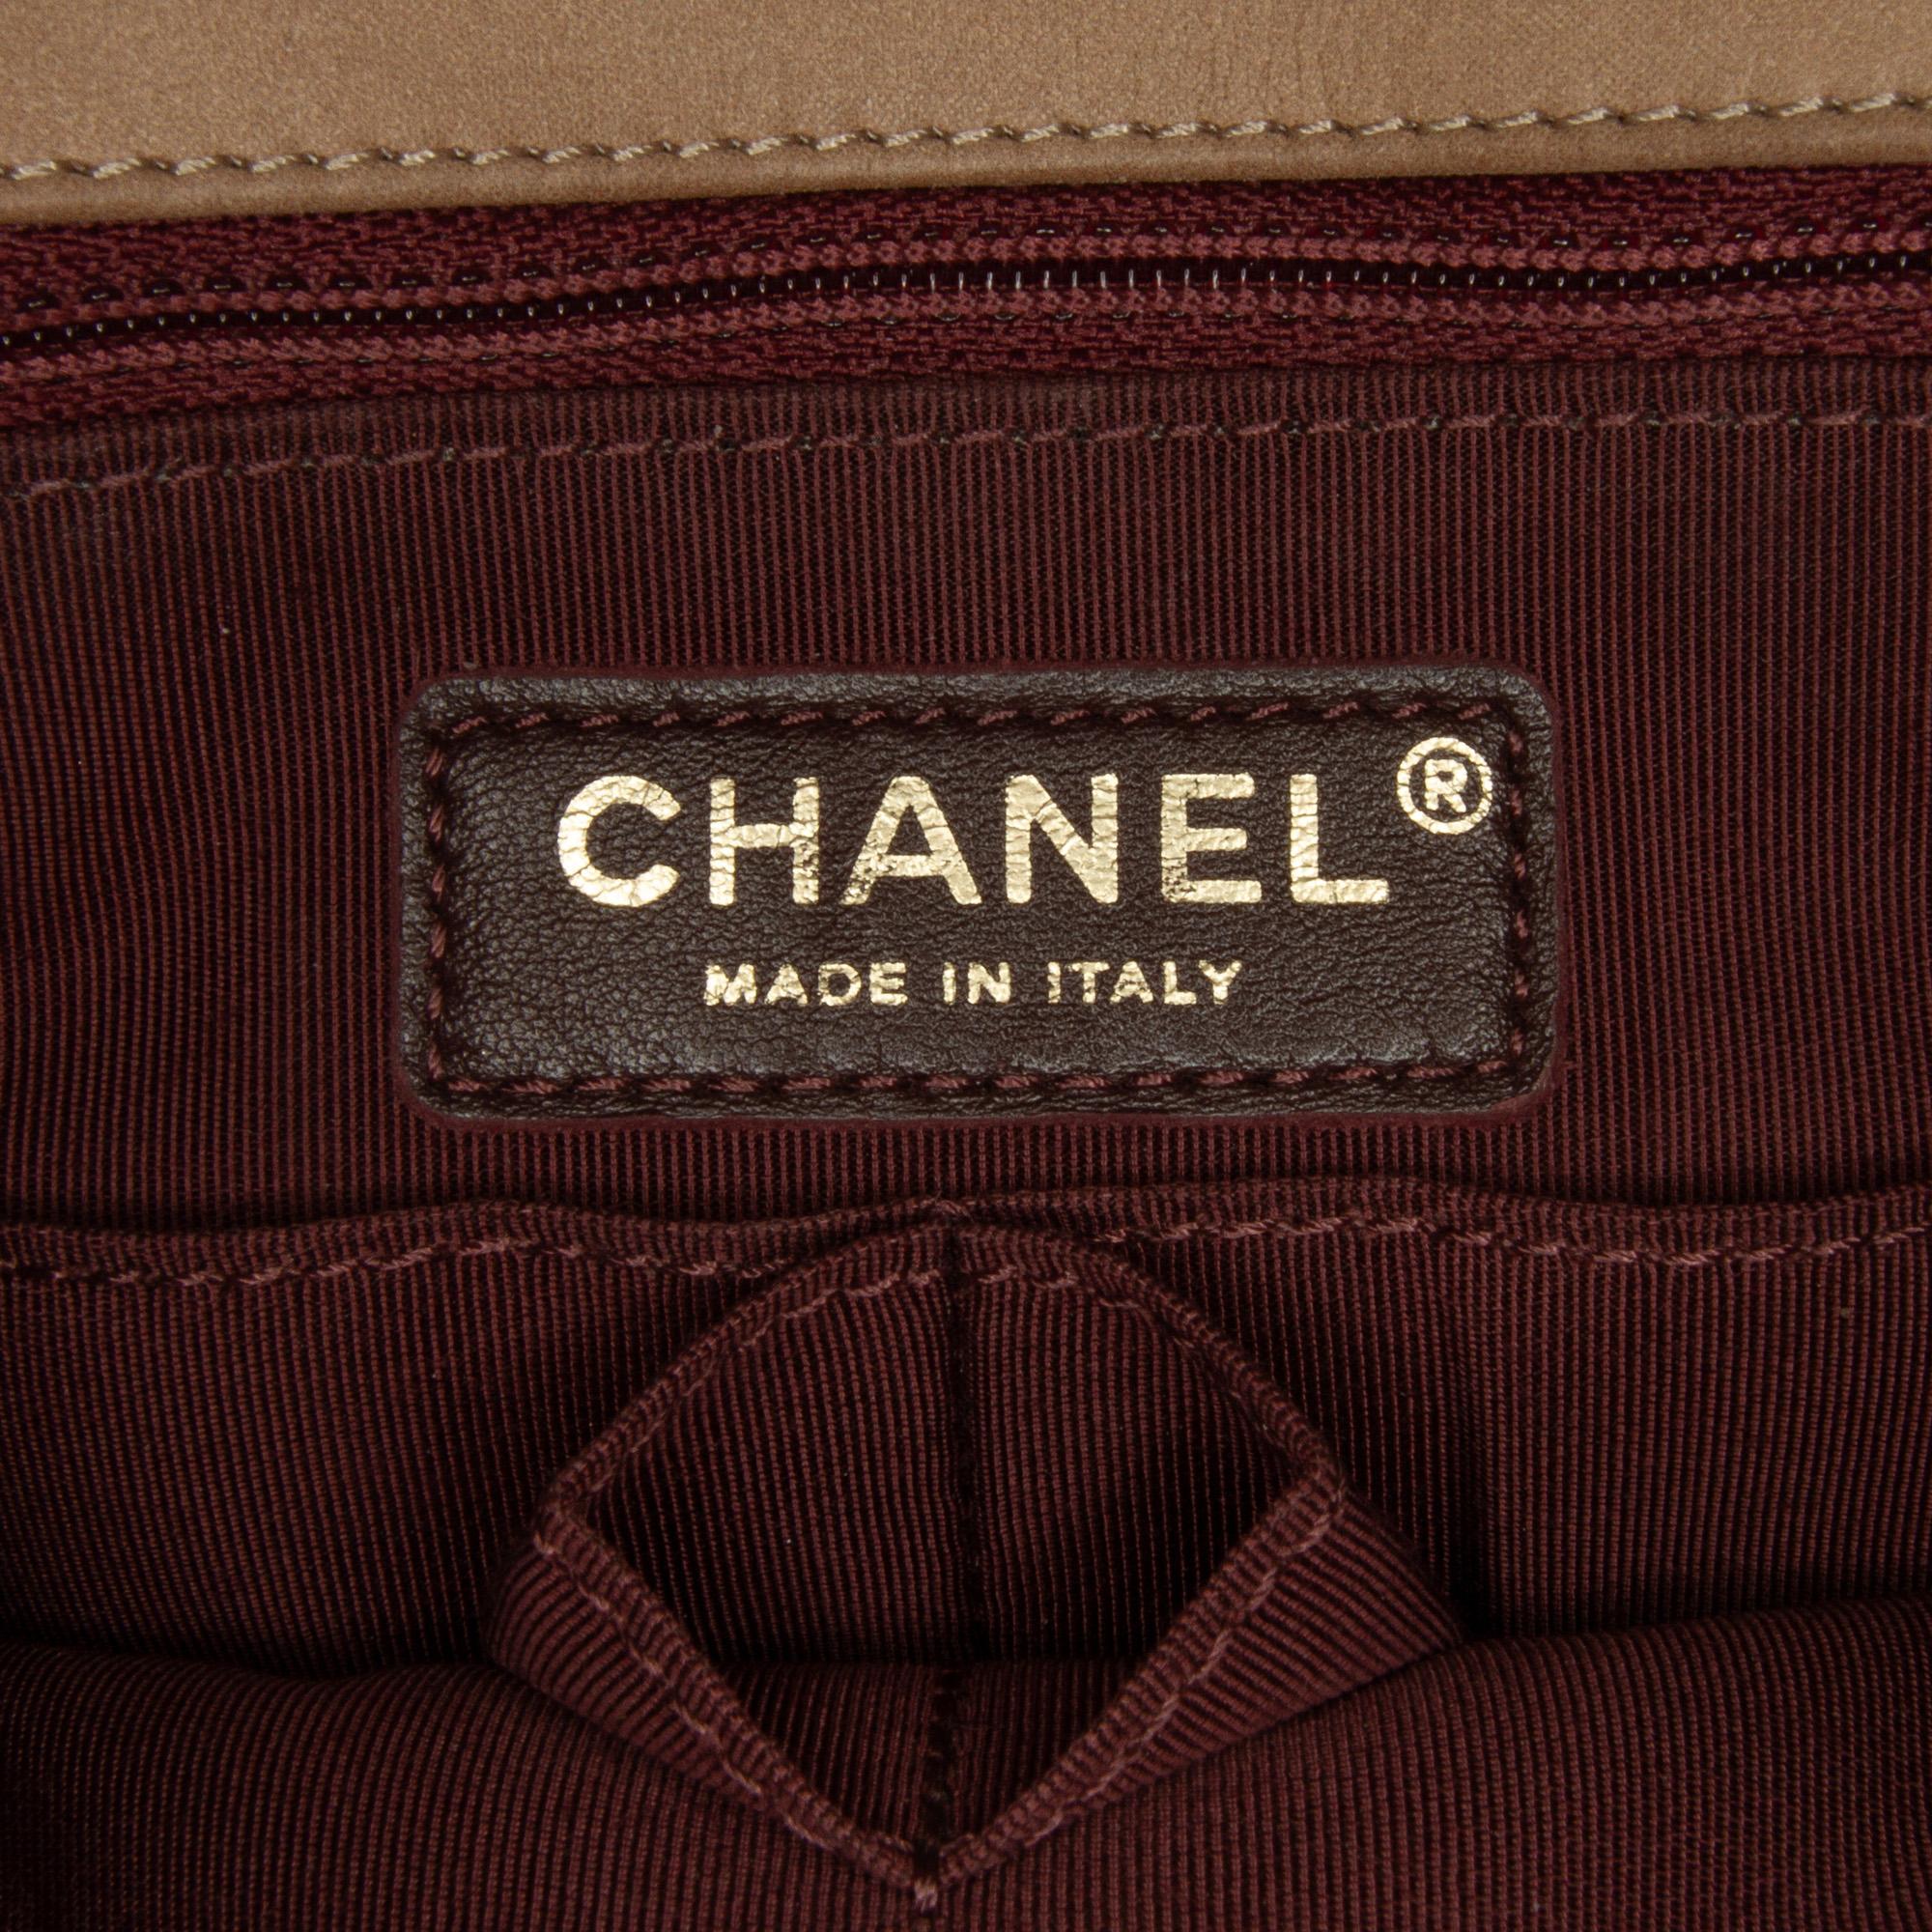 Chanel Beige Jumbo Suede Happy Stitch Flap Bag